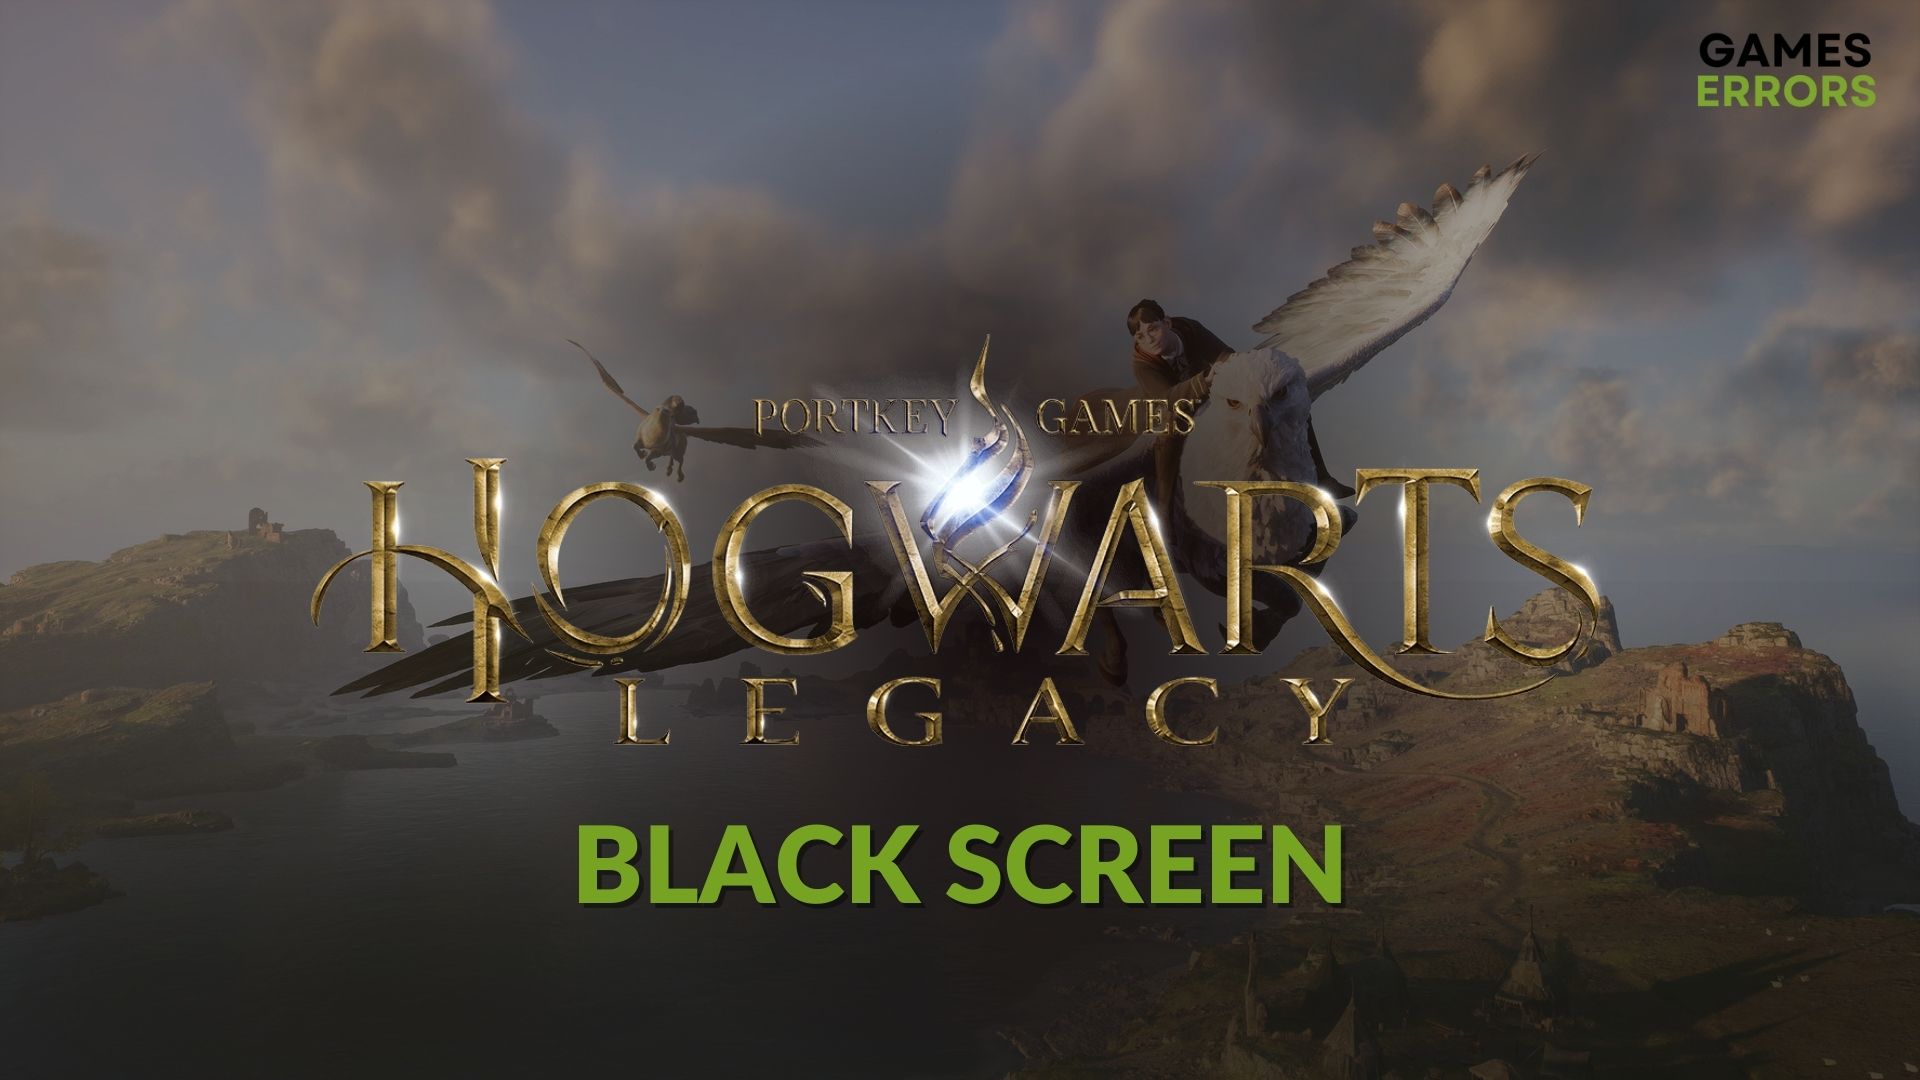 Fix Hogwarts legacy black screen on launch